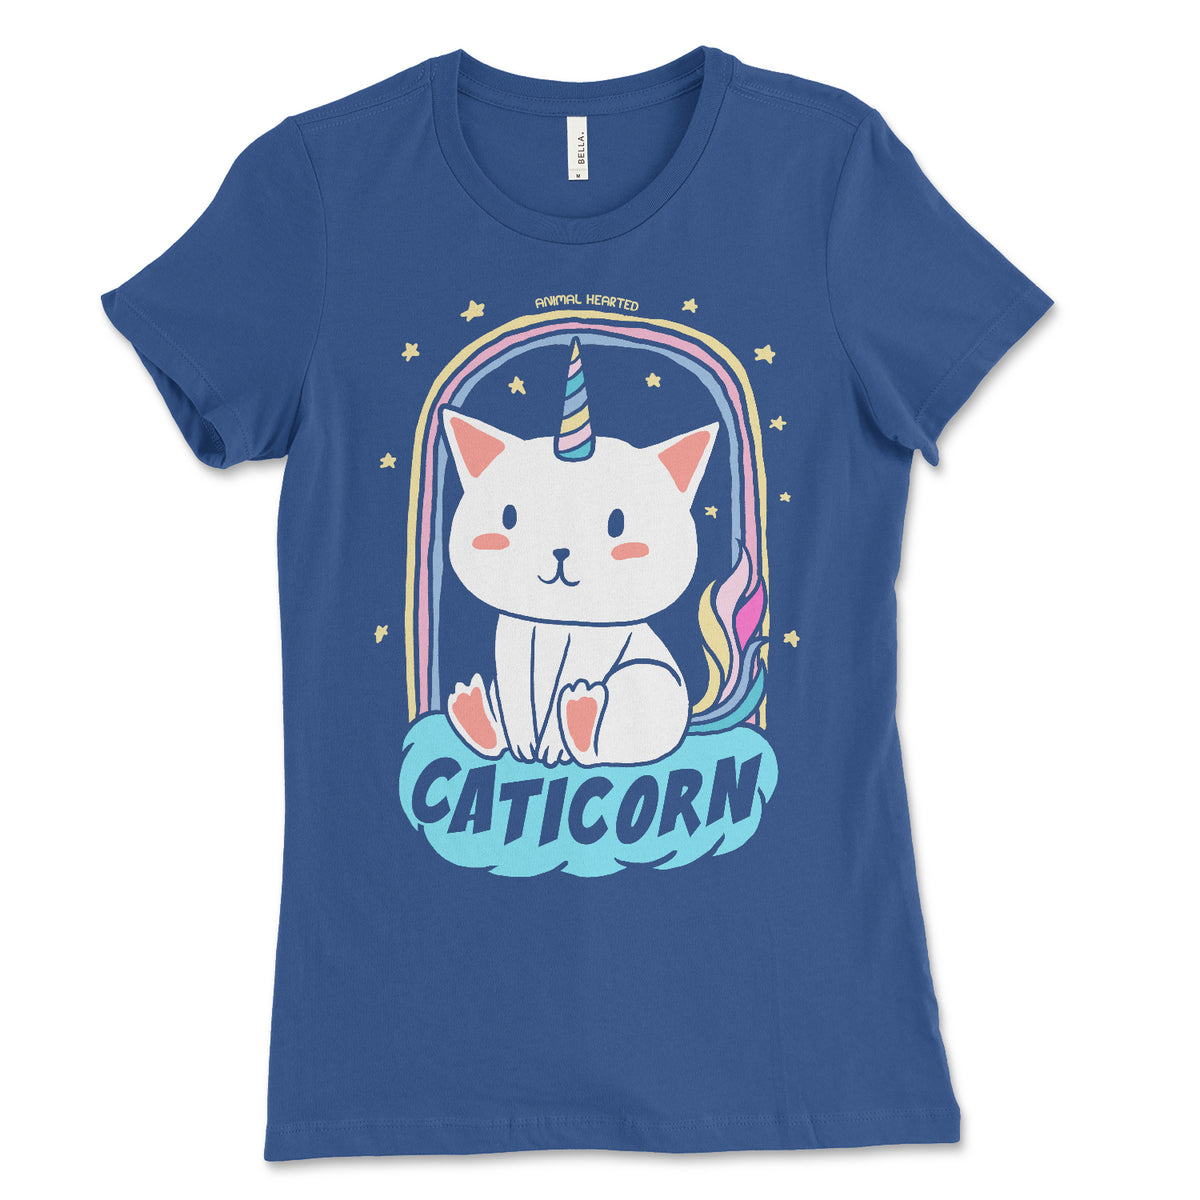 Genetically Engineered Catgirls For Domestic Ownership! T Shirt Diy Cotton  Big Size S-6xl Cat Girl Catgirl Cute Blue Ears Cat - T-shirts - AliExpress